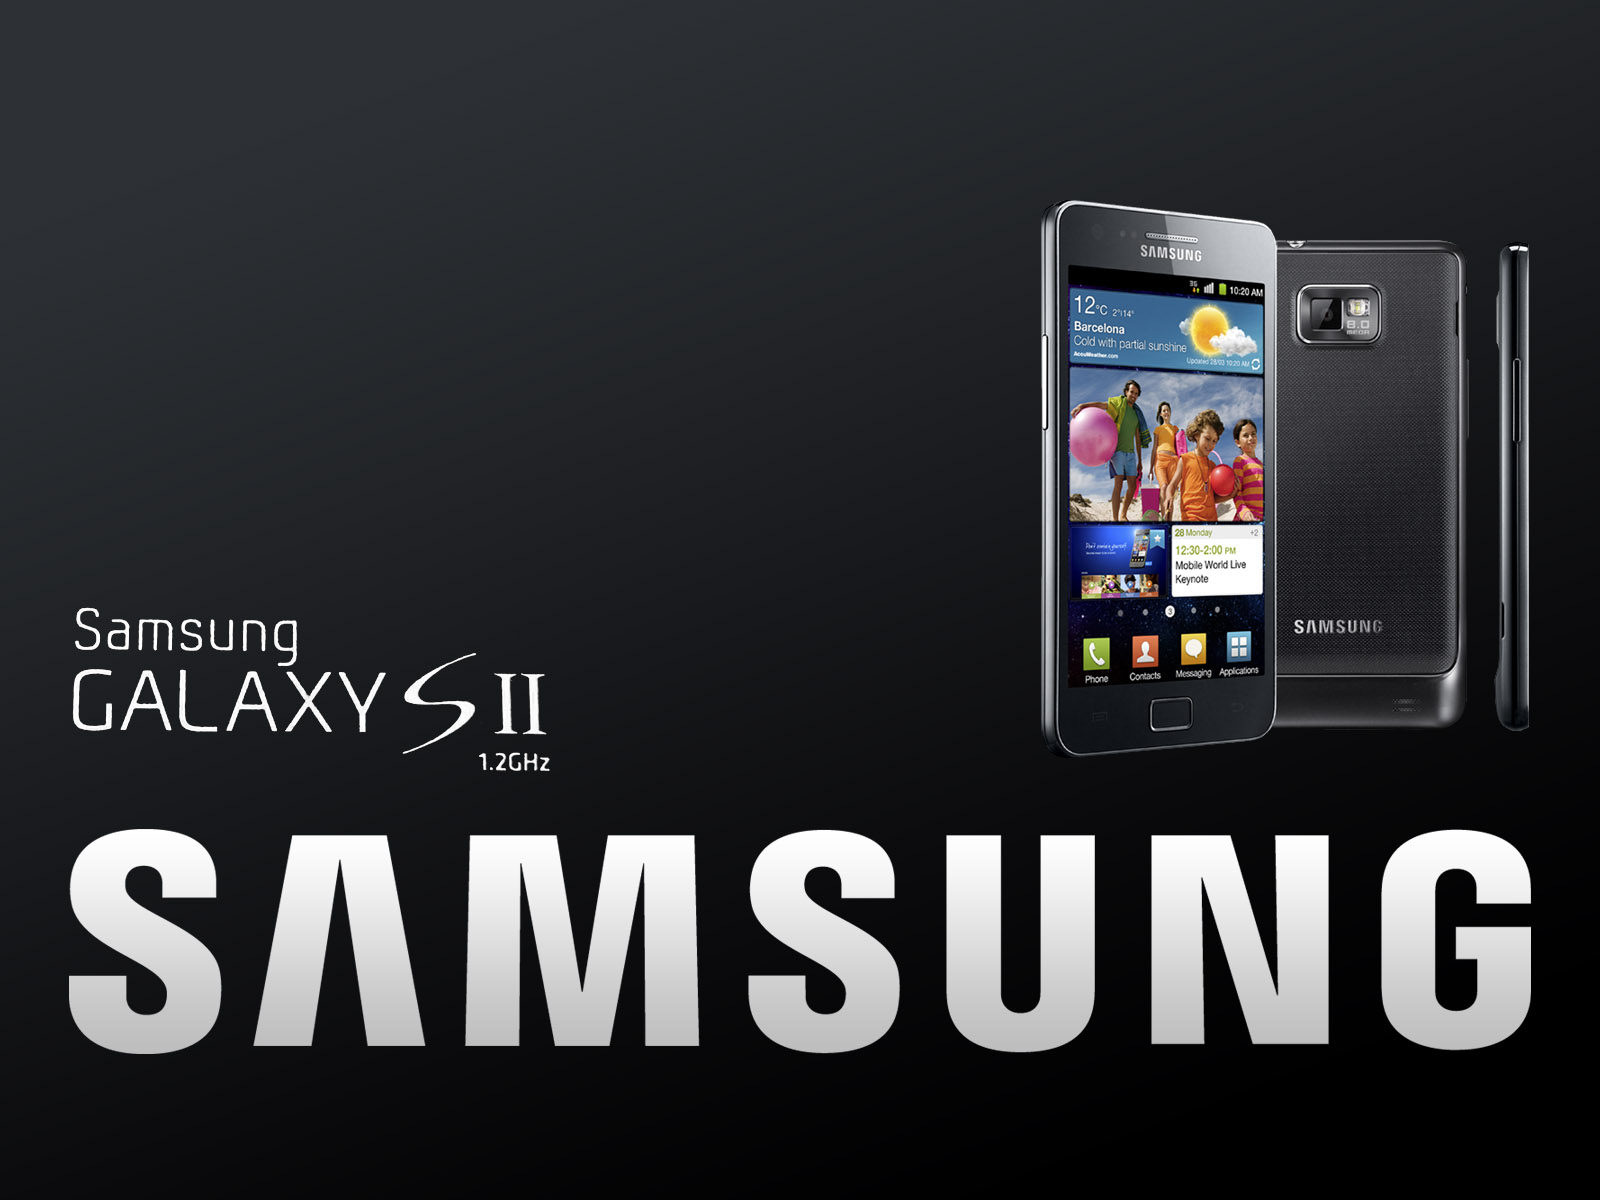 http://4.bp.blogspot.com/-lxMsxw16zrs/UWSBmVagLLI/AAAAAAAAFGk/LkX3mdx2TIA/s1600/Samsung+Galaxy+S2.jpg